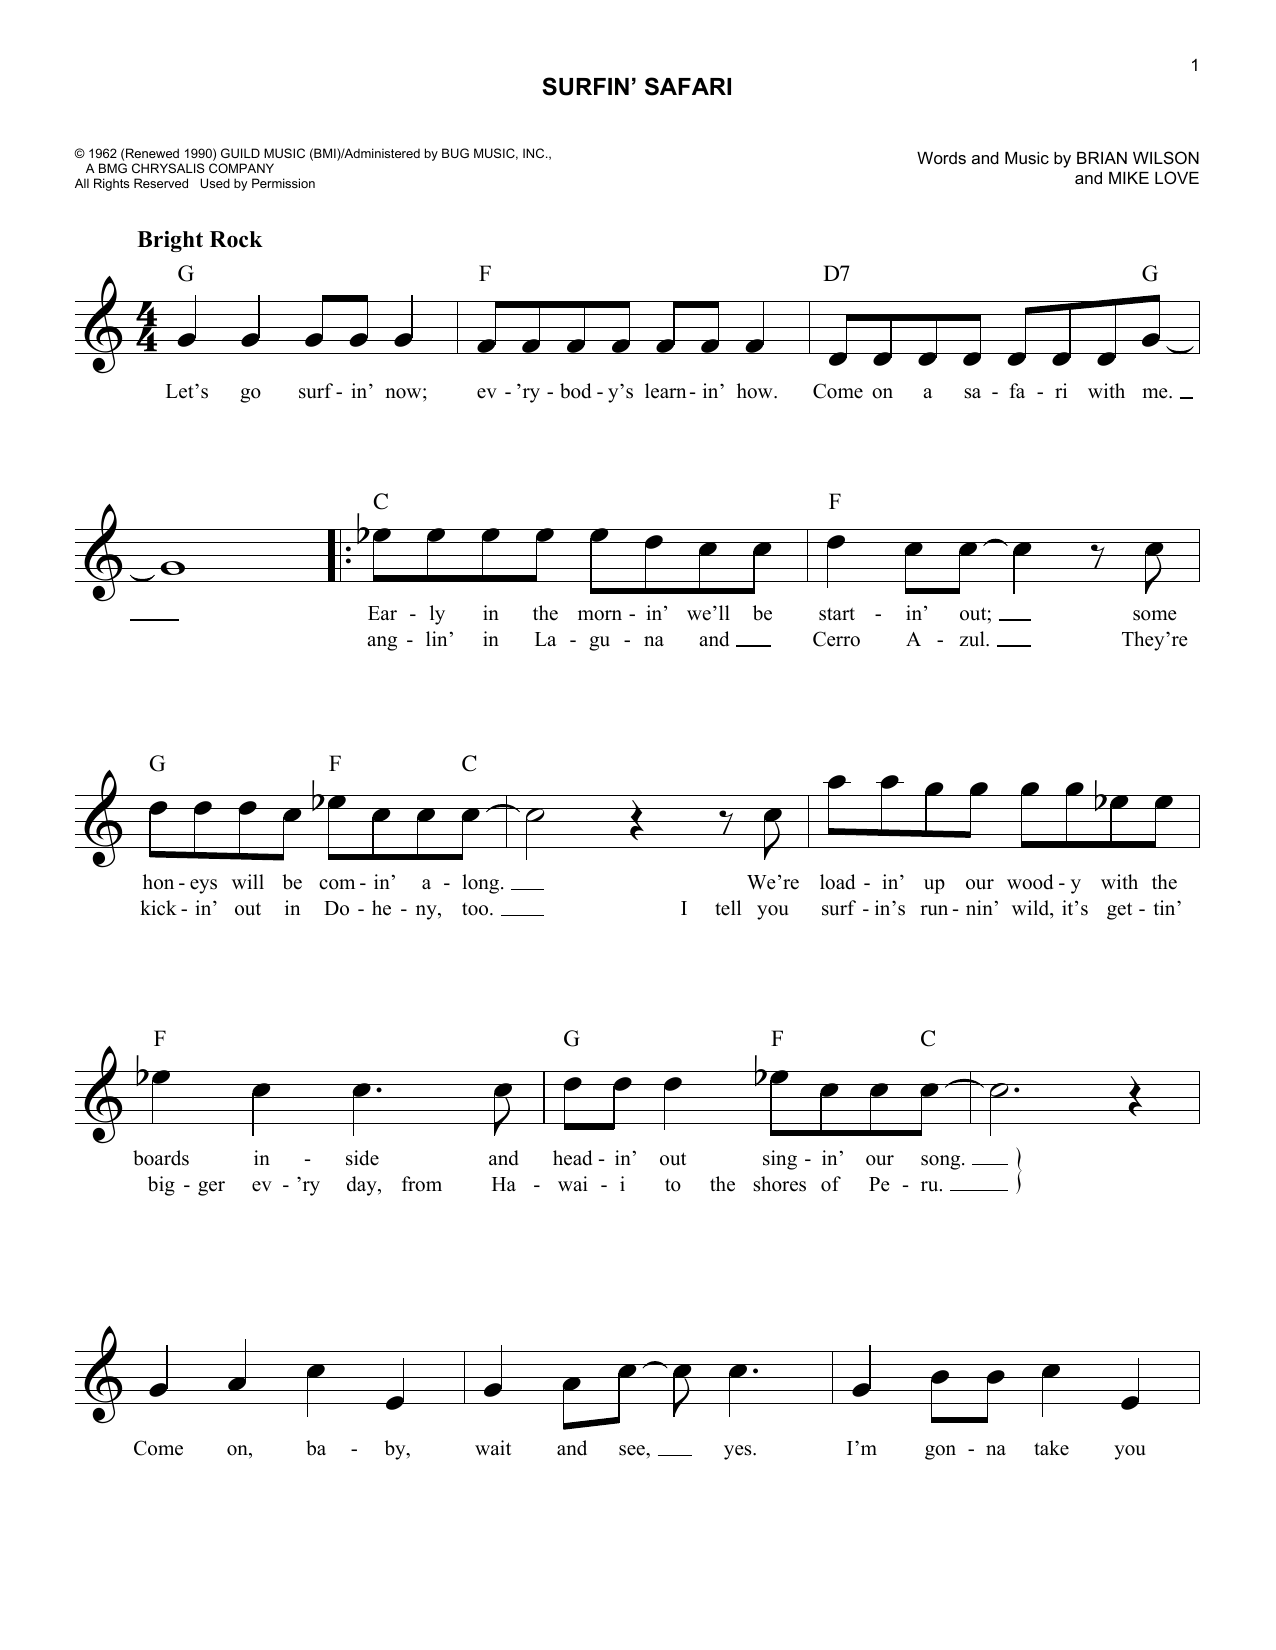 Beach Boys Surfin' Safari Sheet Music Notes & Chords for Melody Line, Lyrics & Chords - Download or Print PDF